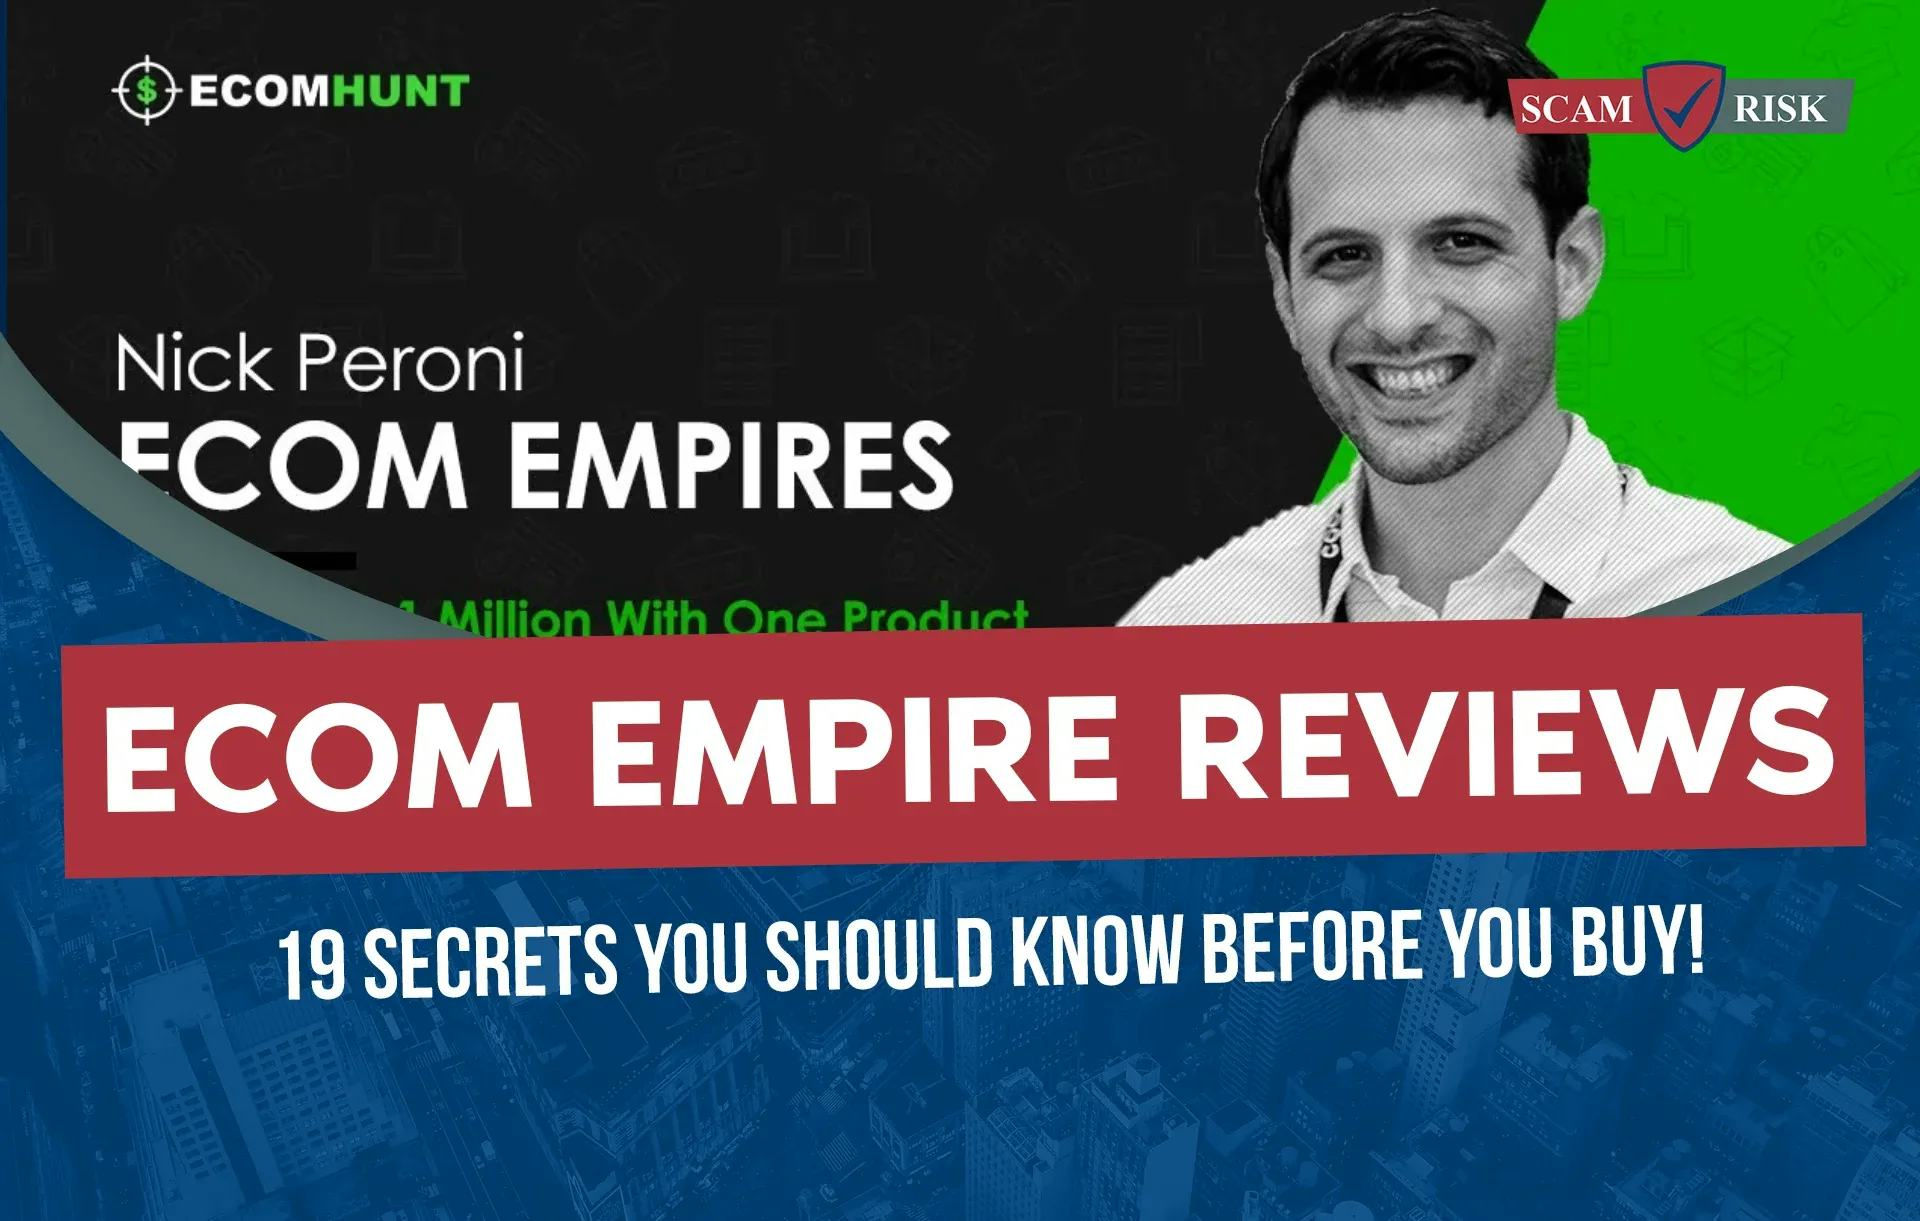 eCom Empires Review: 19 Secrets To Know Before You Buy!